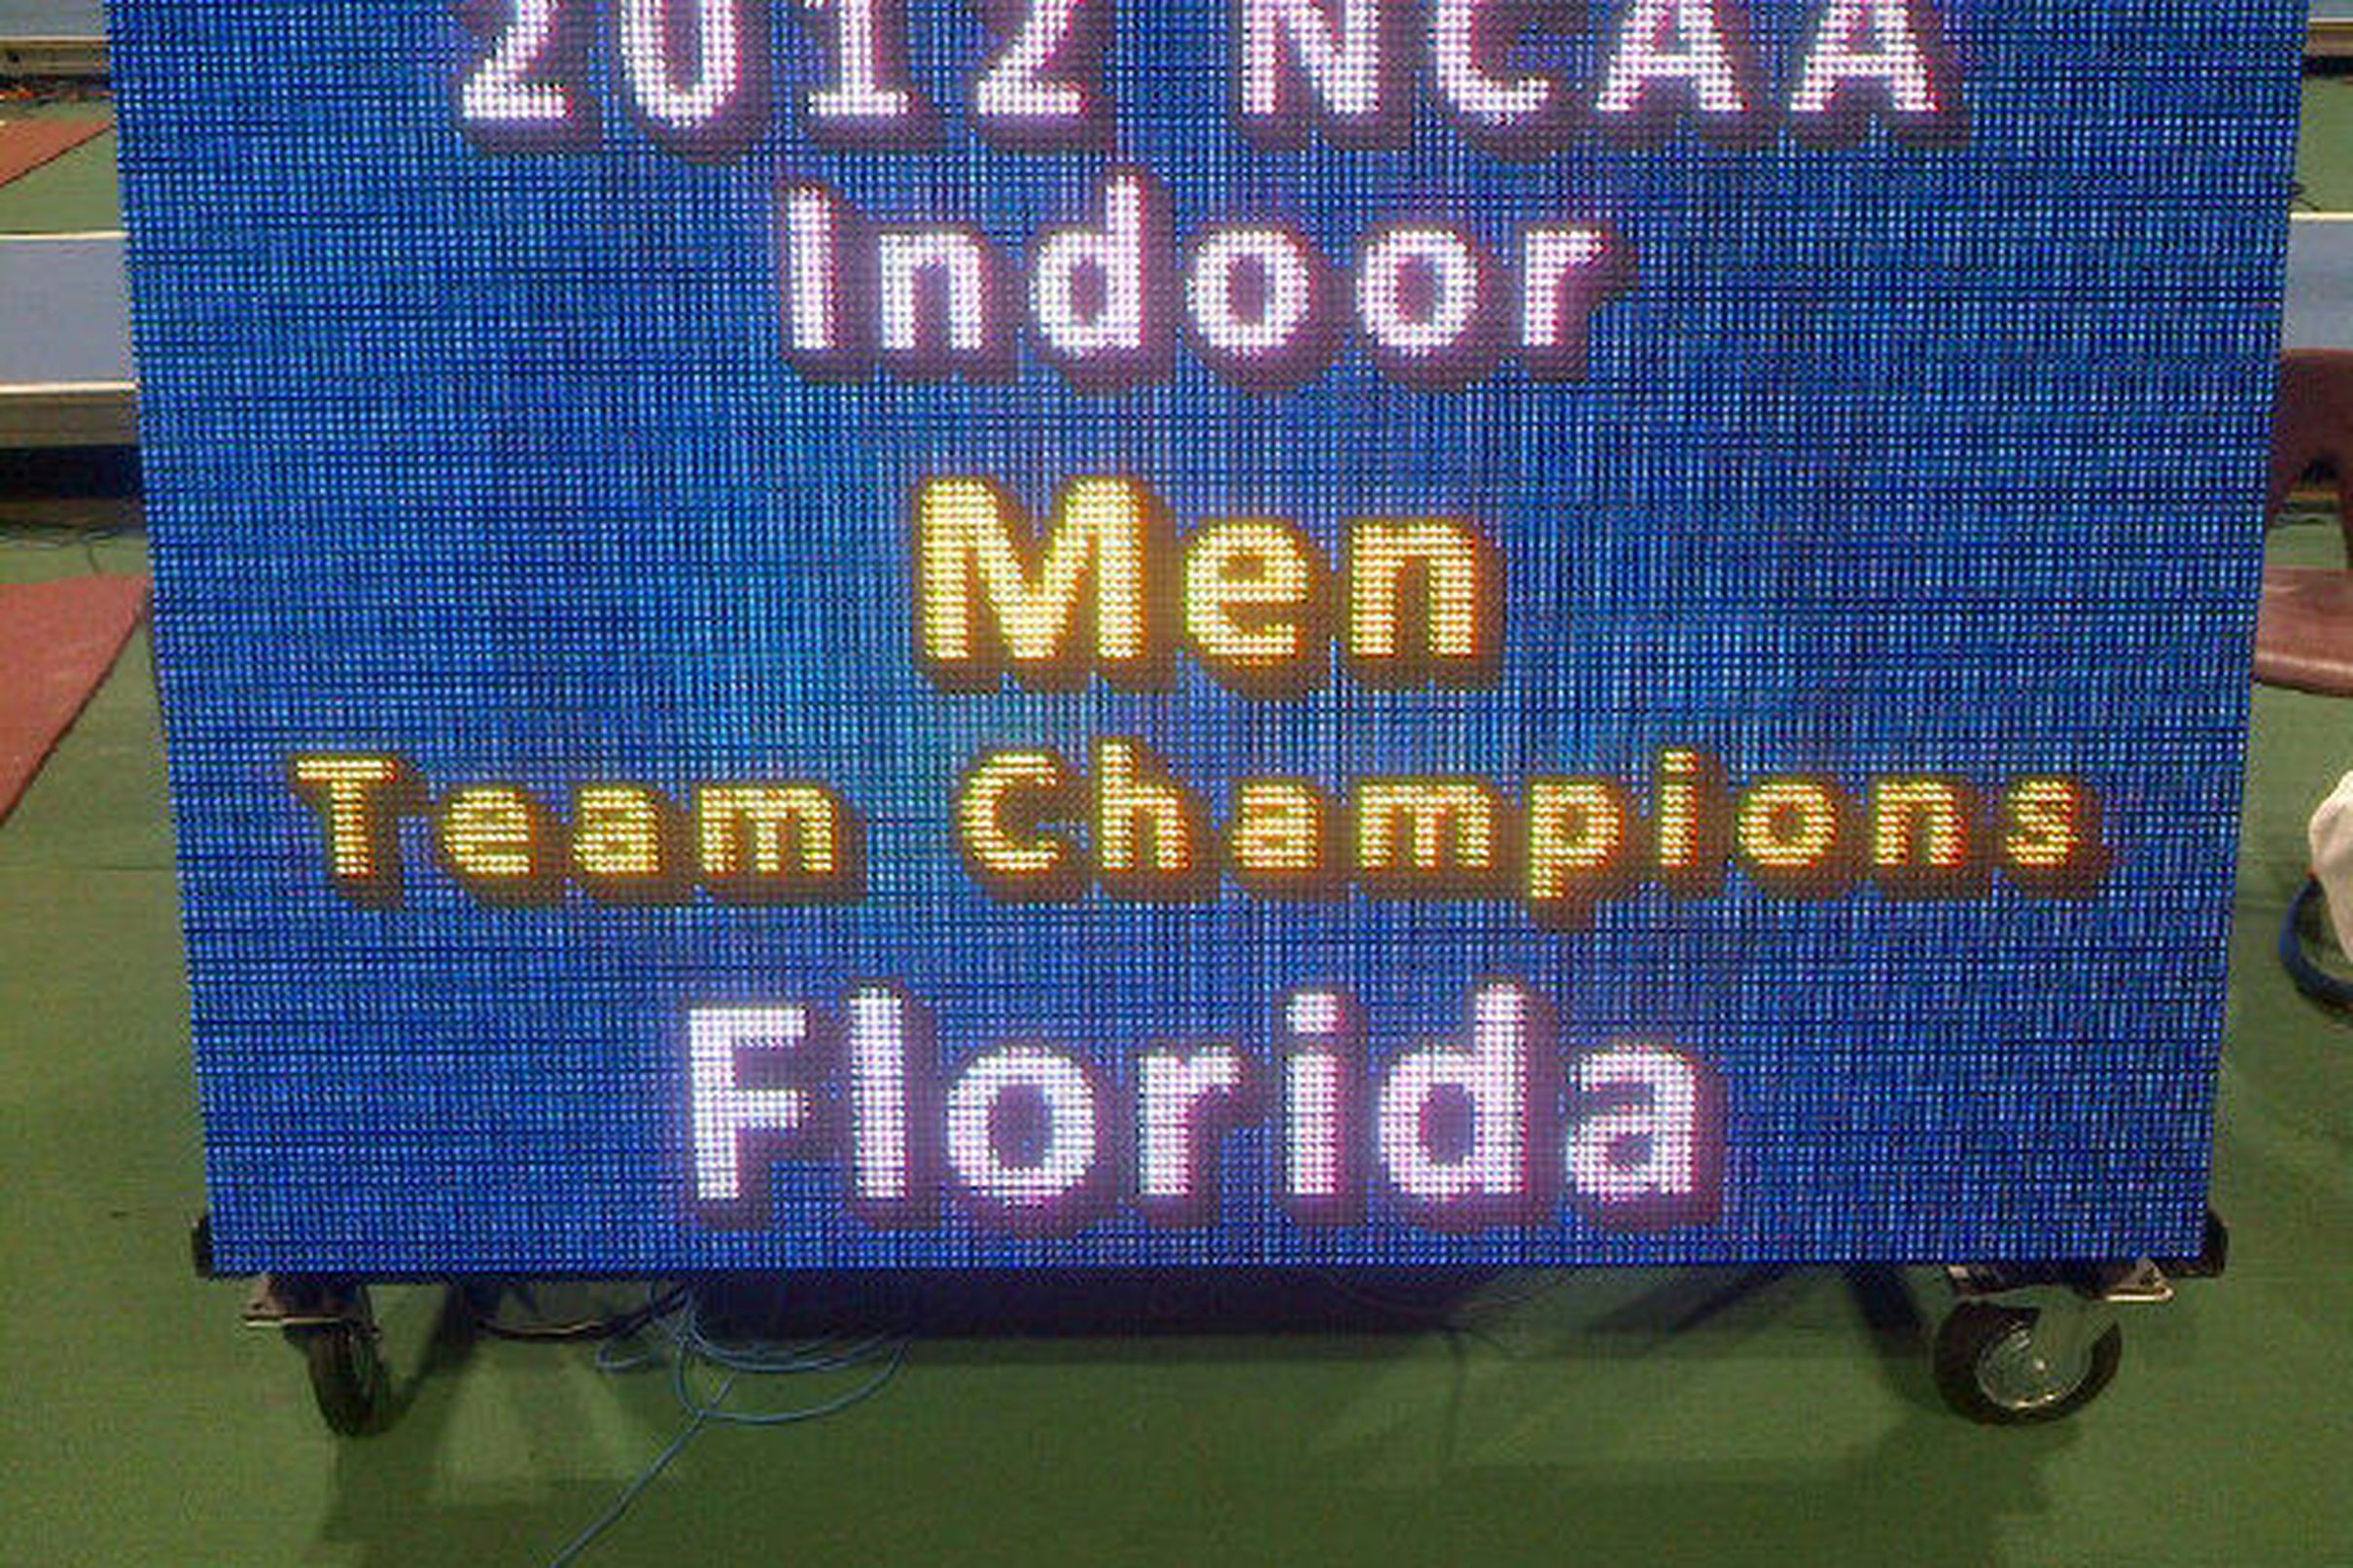 Florida Gators Win Third Straight NCAA Indoor Track And Field National